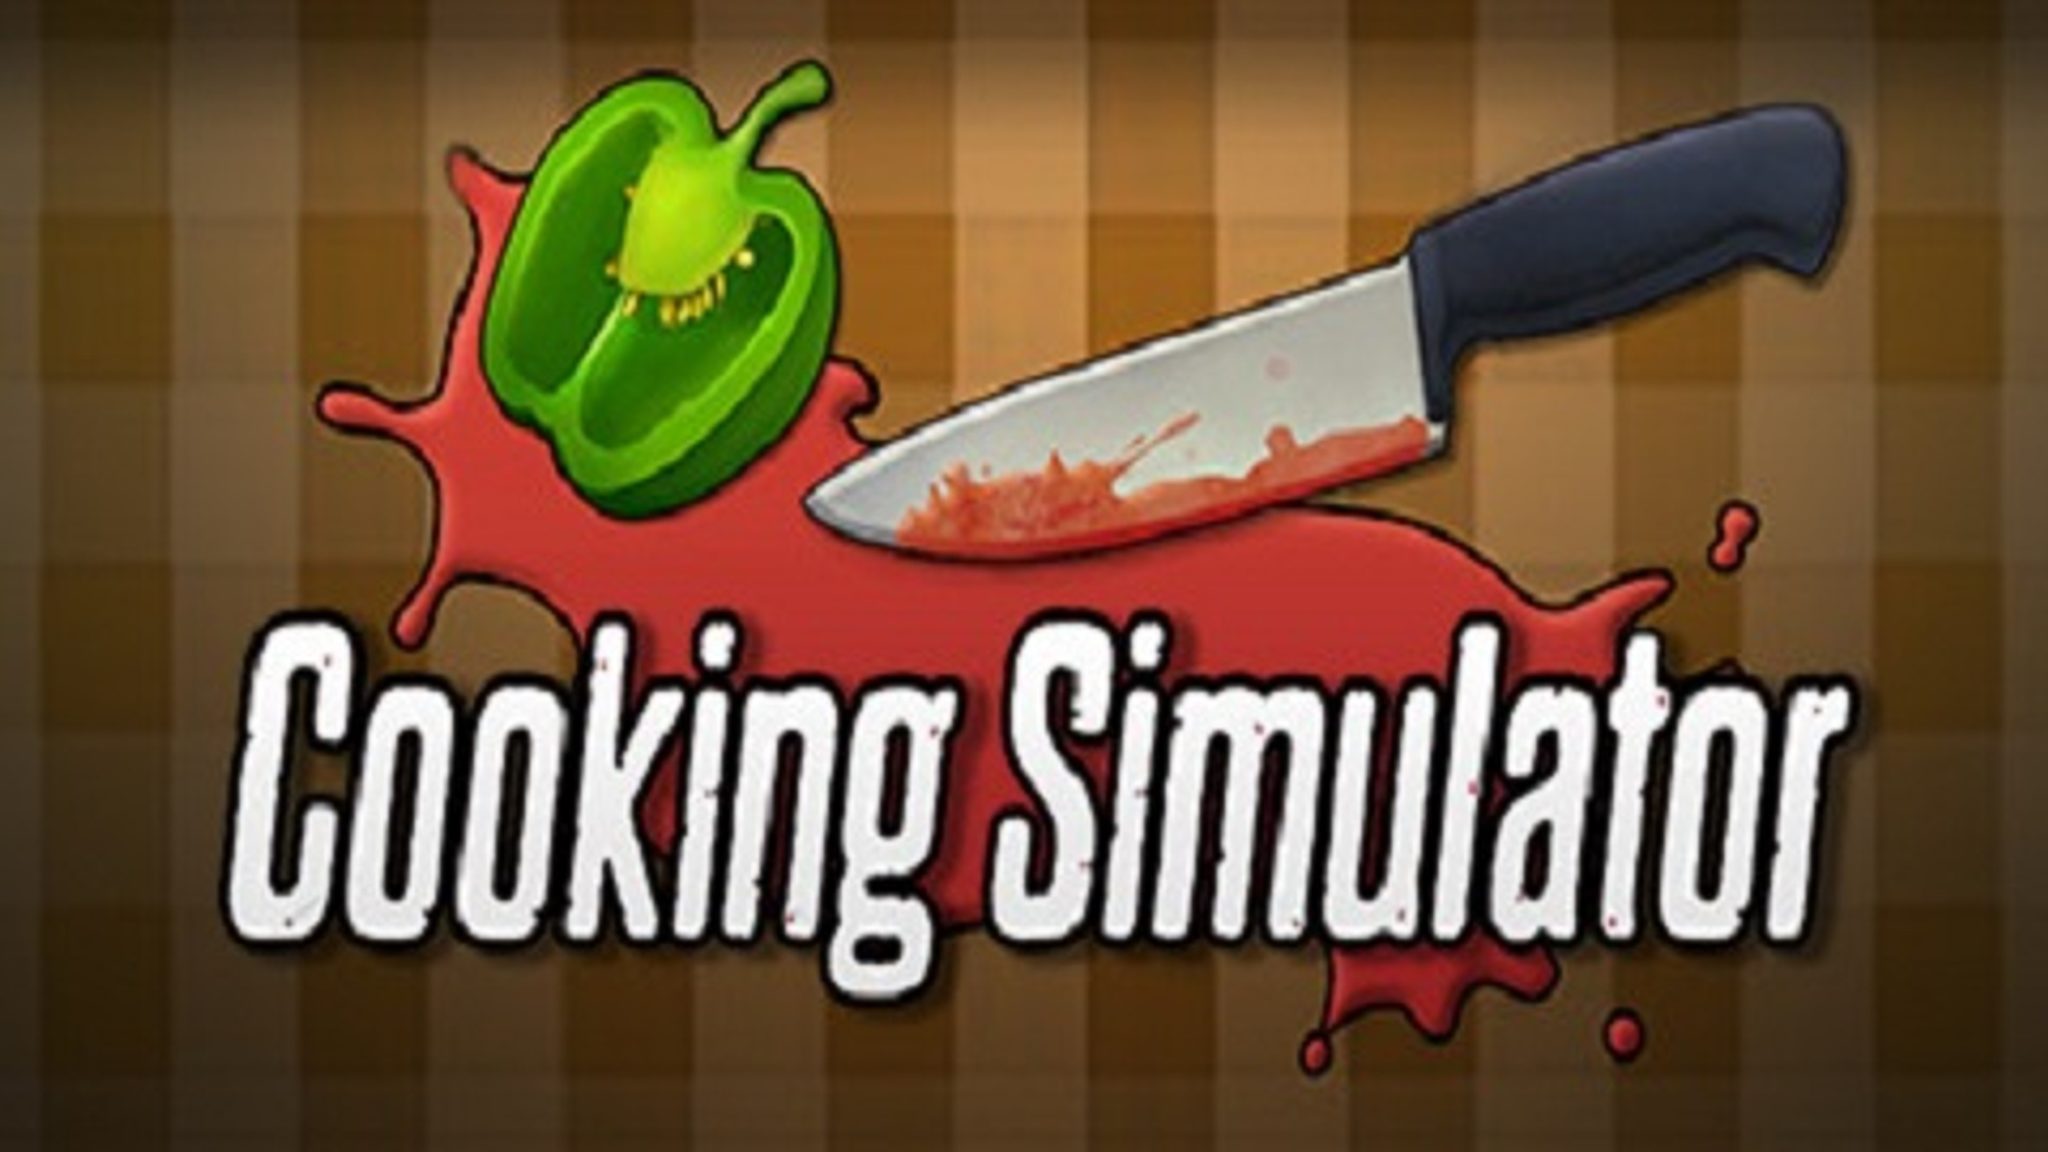 cooking simulator online